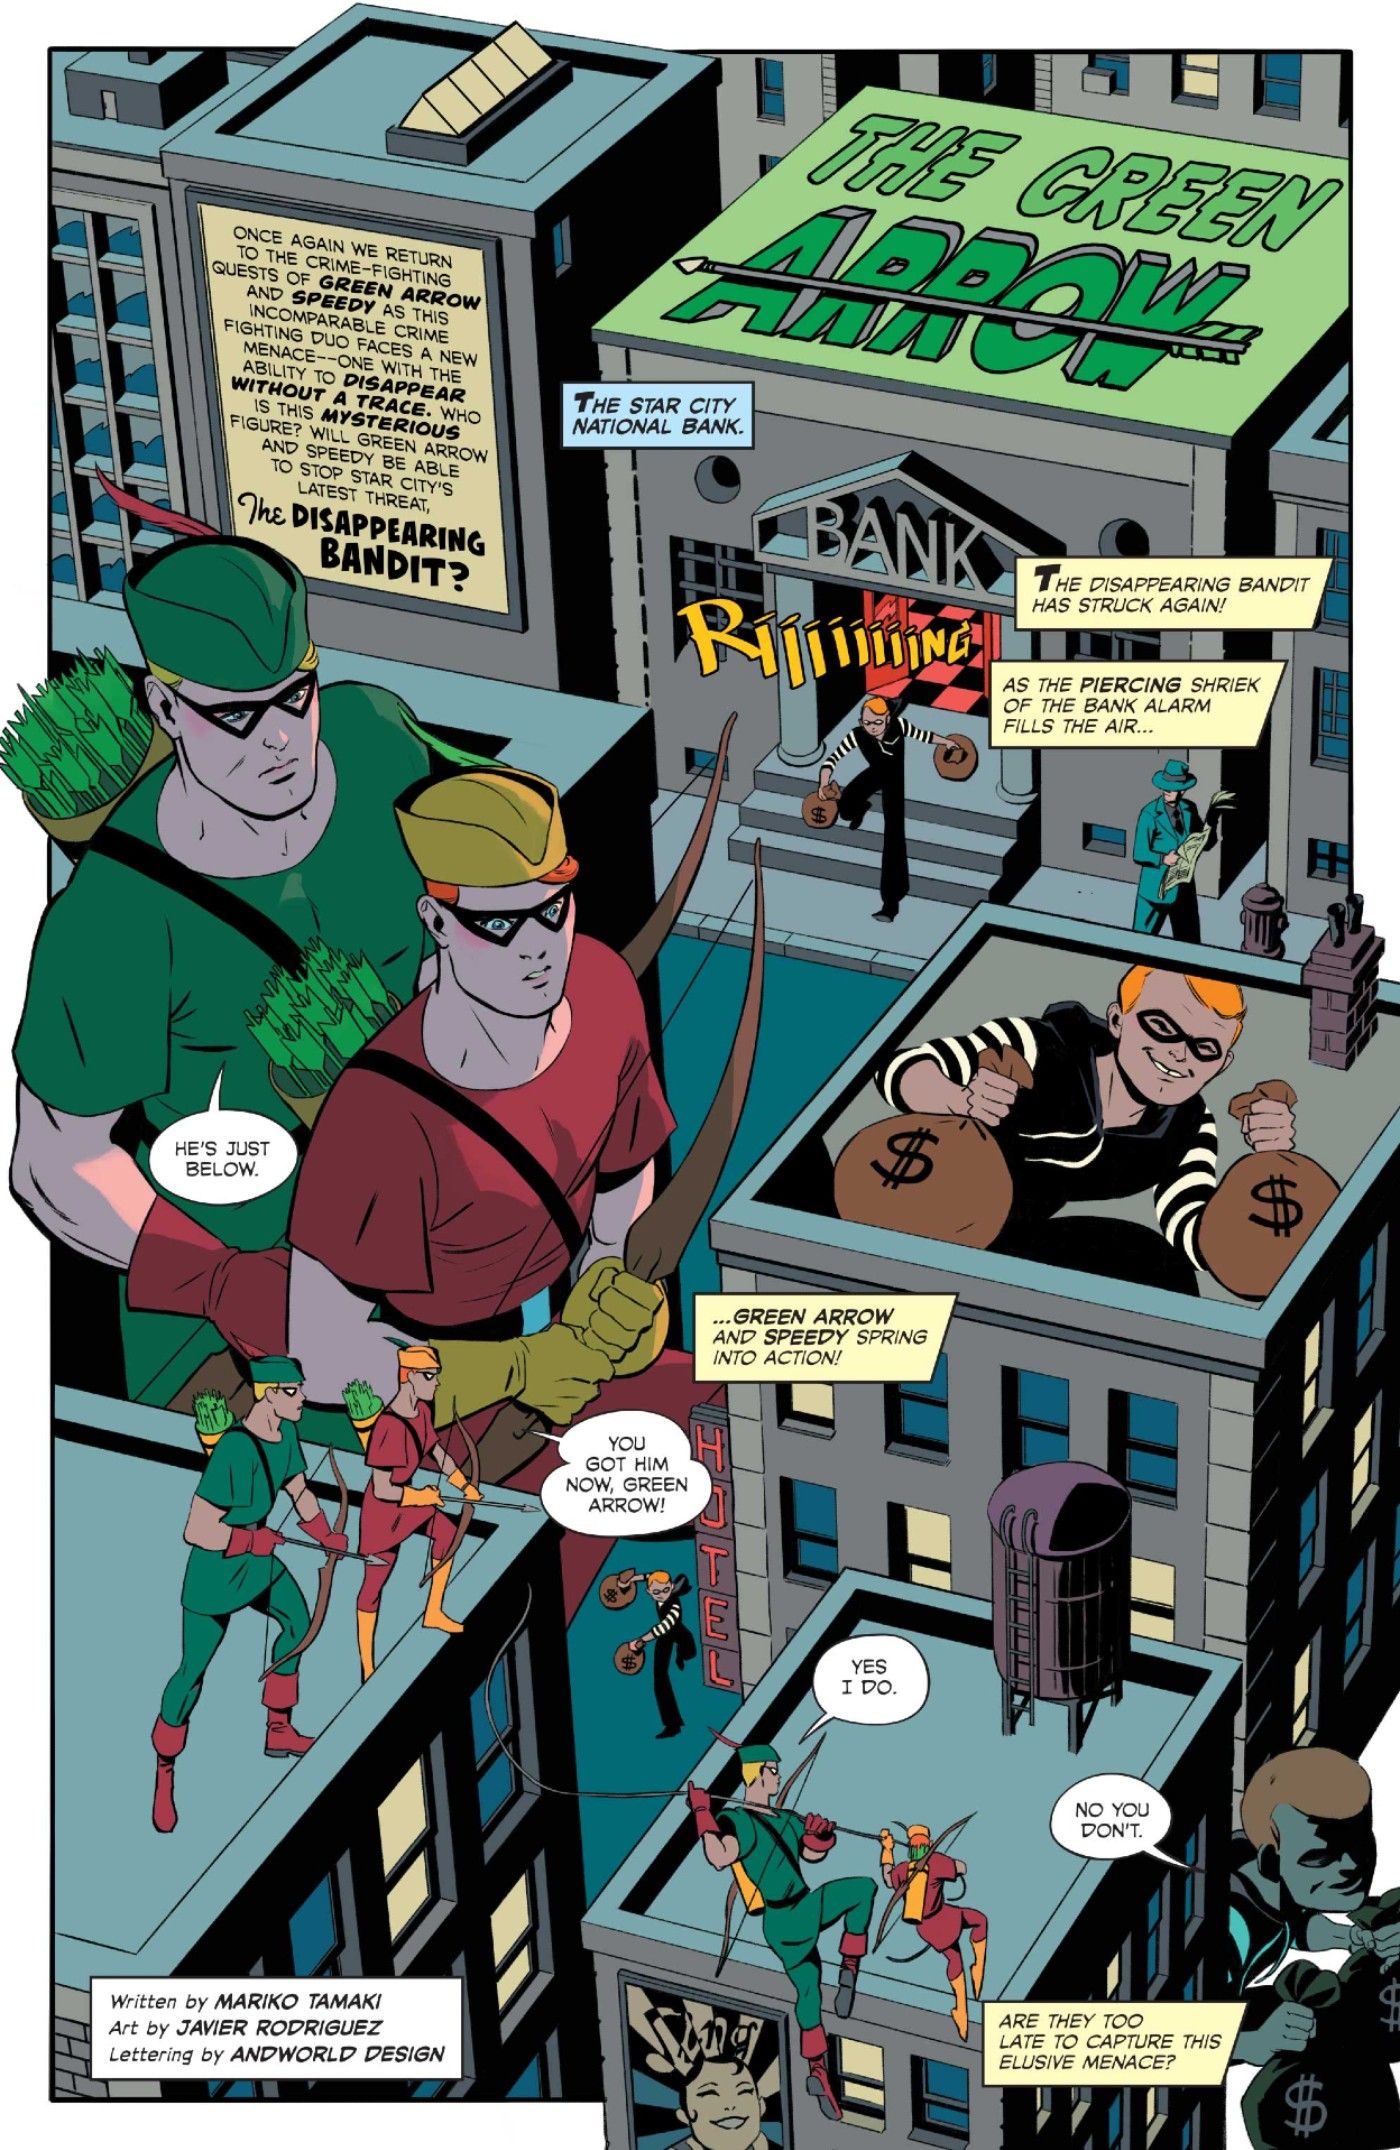 Green Arrow Brings Back His Hilarious Version of the BatSignal